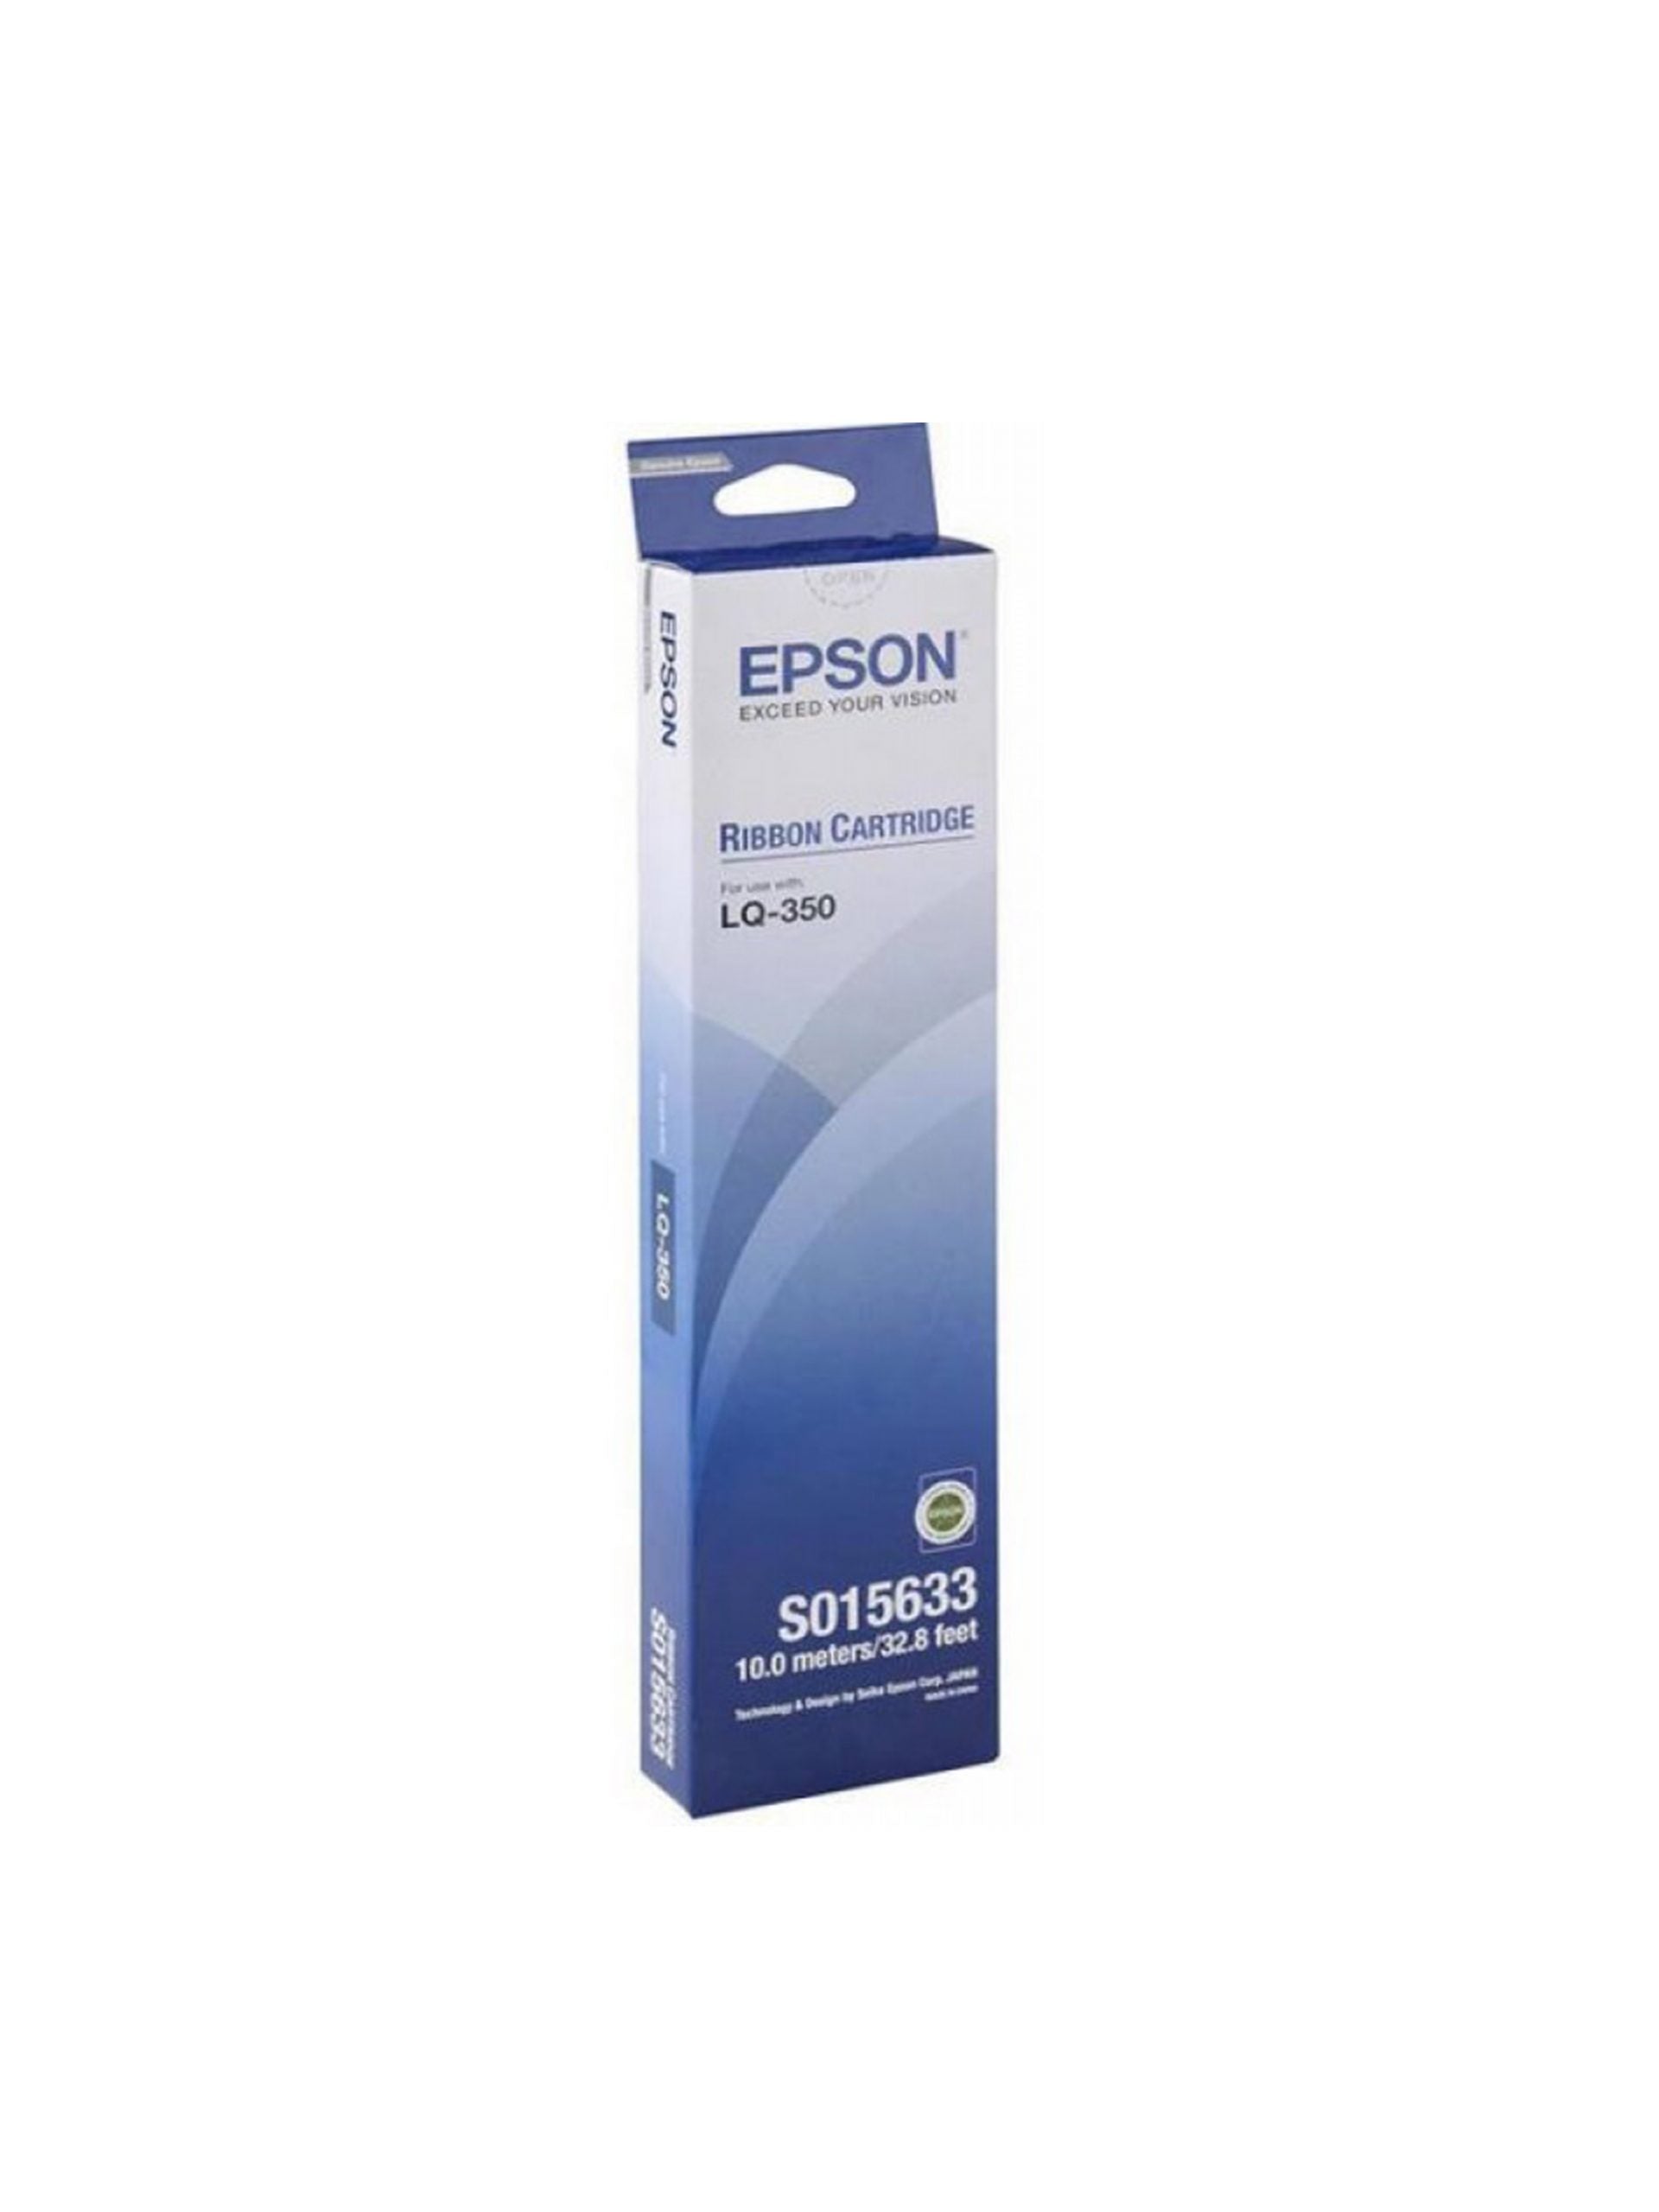 Epson LQ-350 Ribbon Cartridge 7753